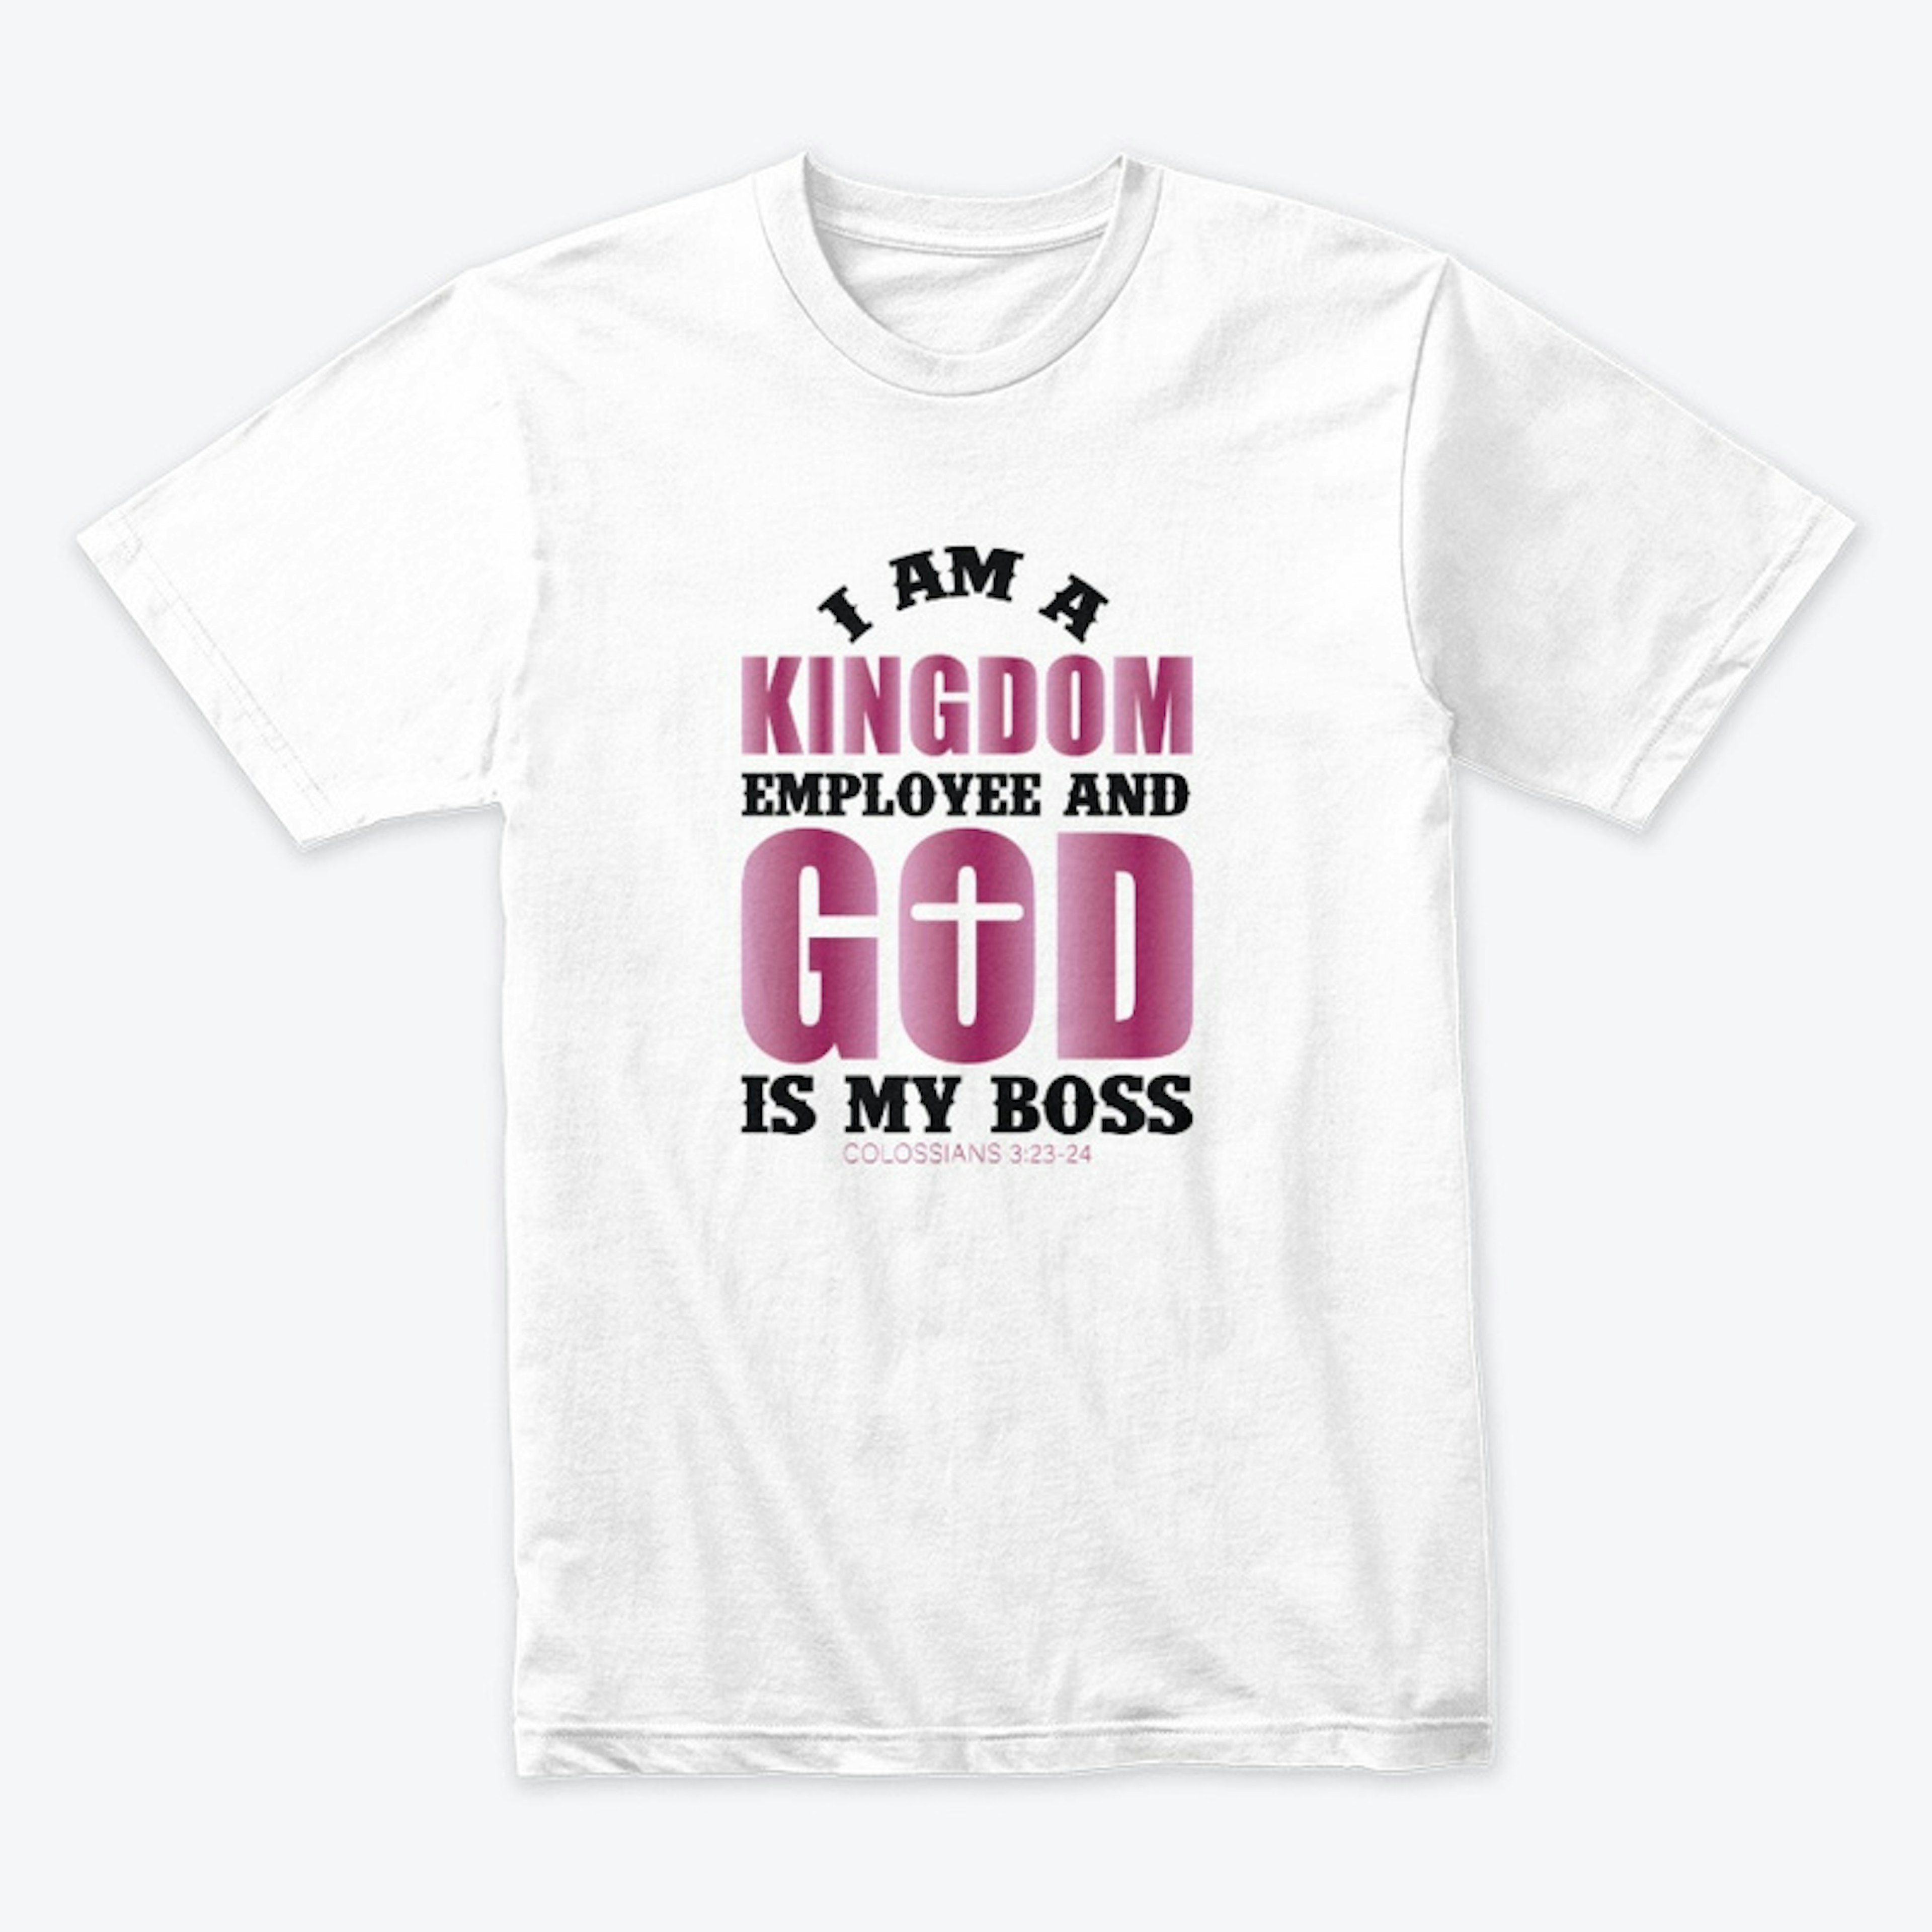 I am a kingdom employee 